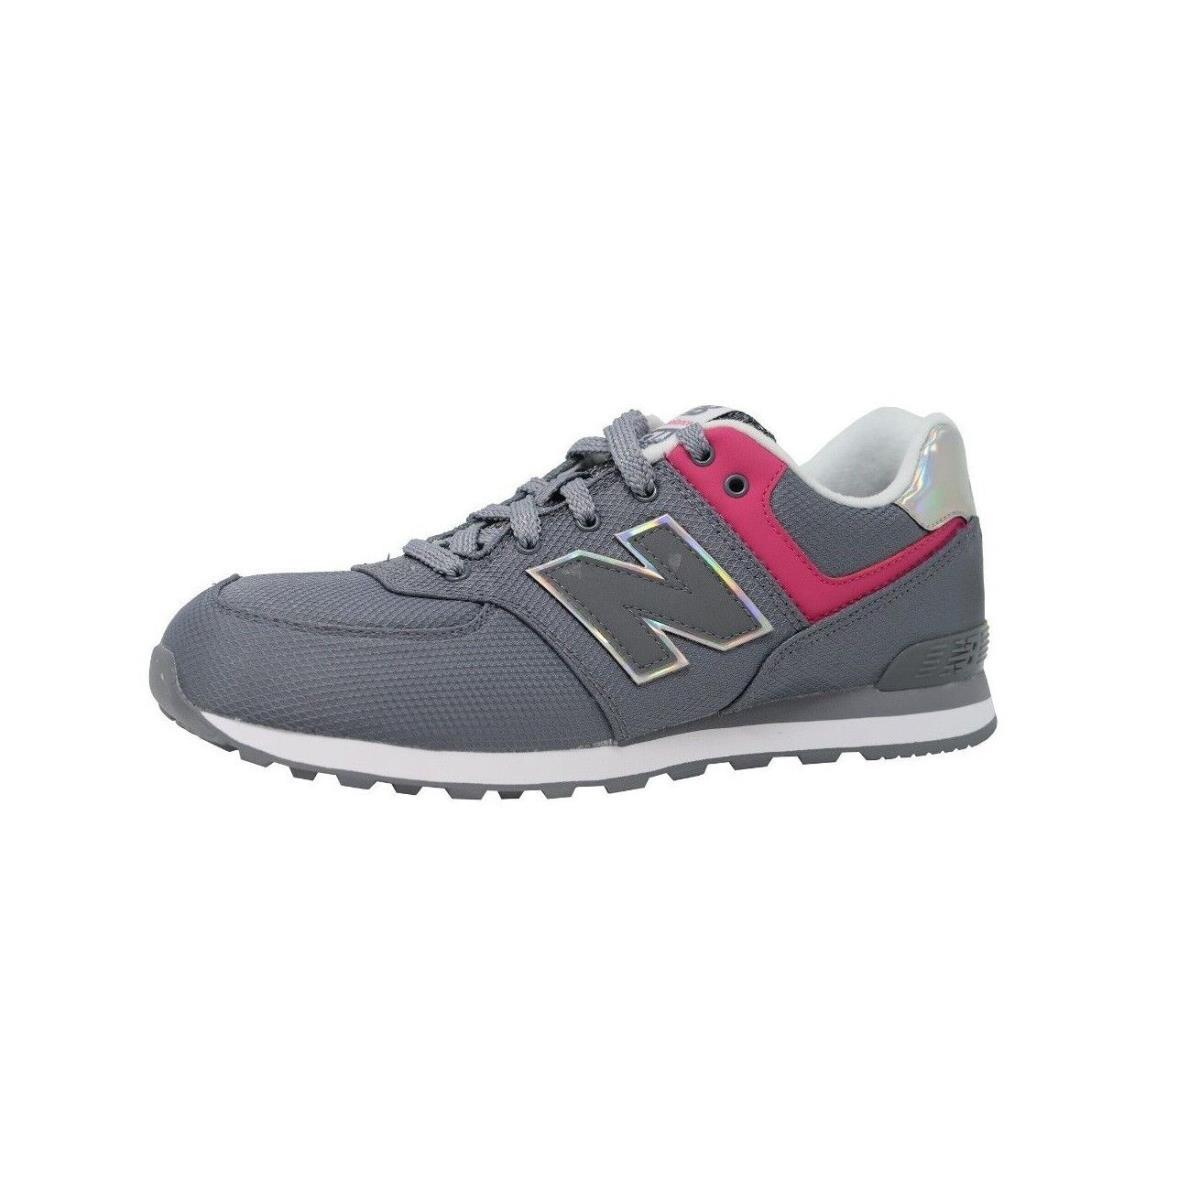 New Balance Girls Big Kids Running Shoes Sneakers KL574J3G - Grey/pink